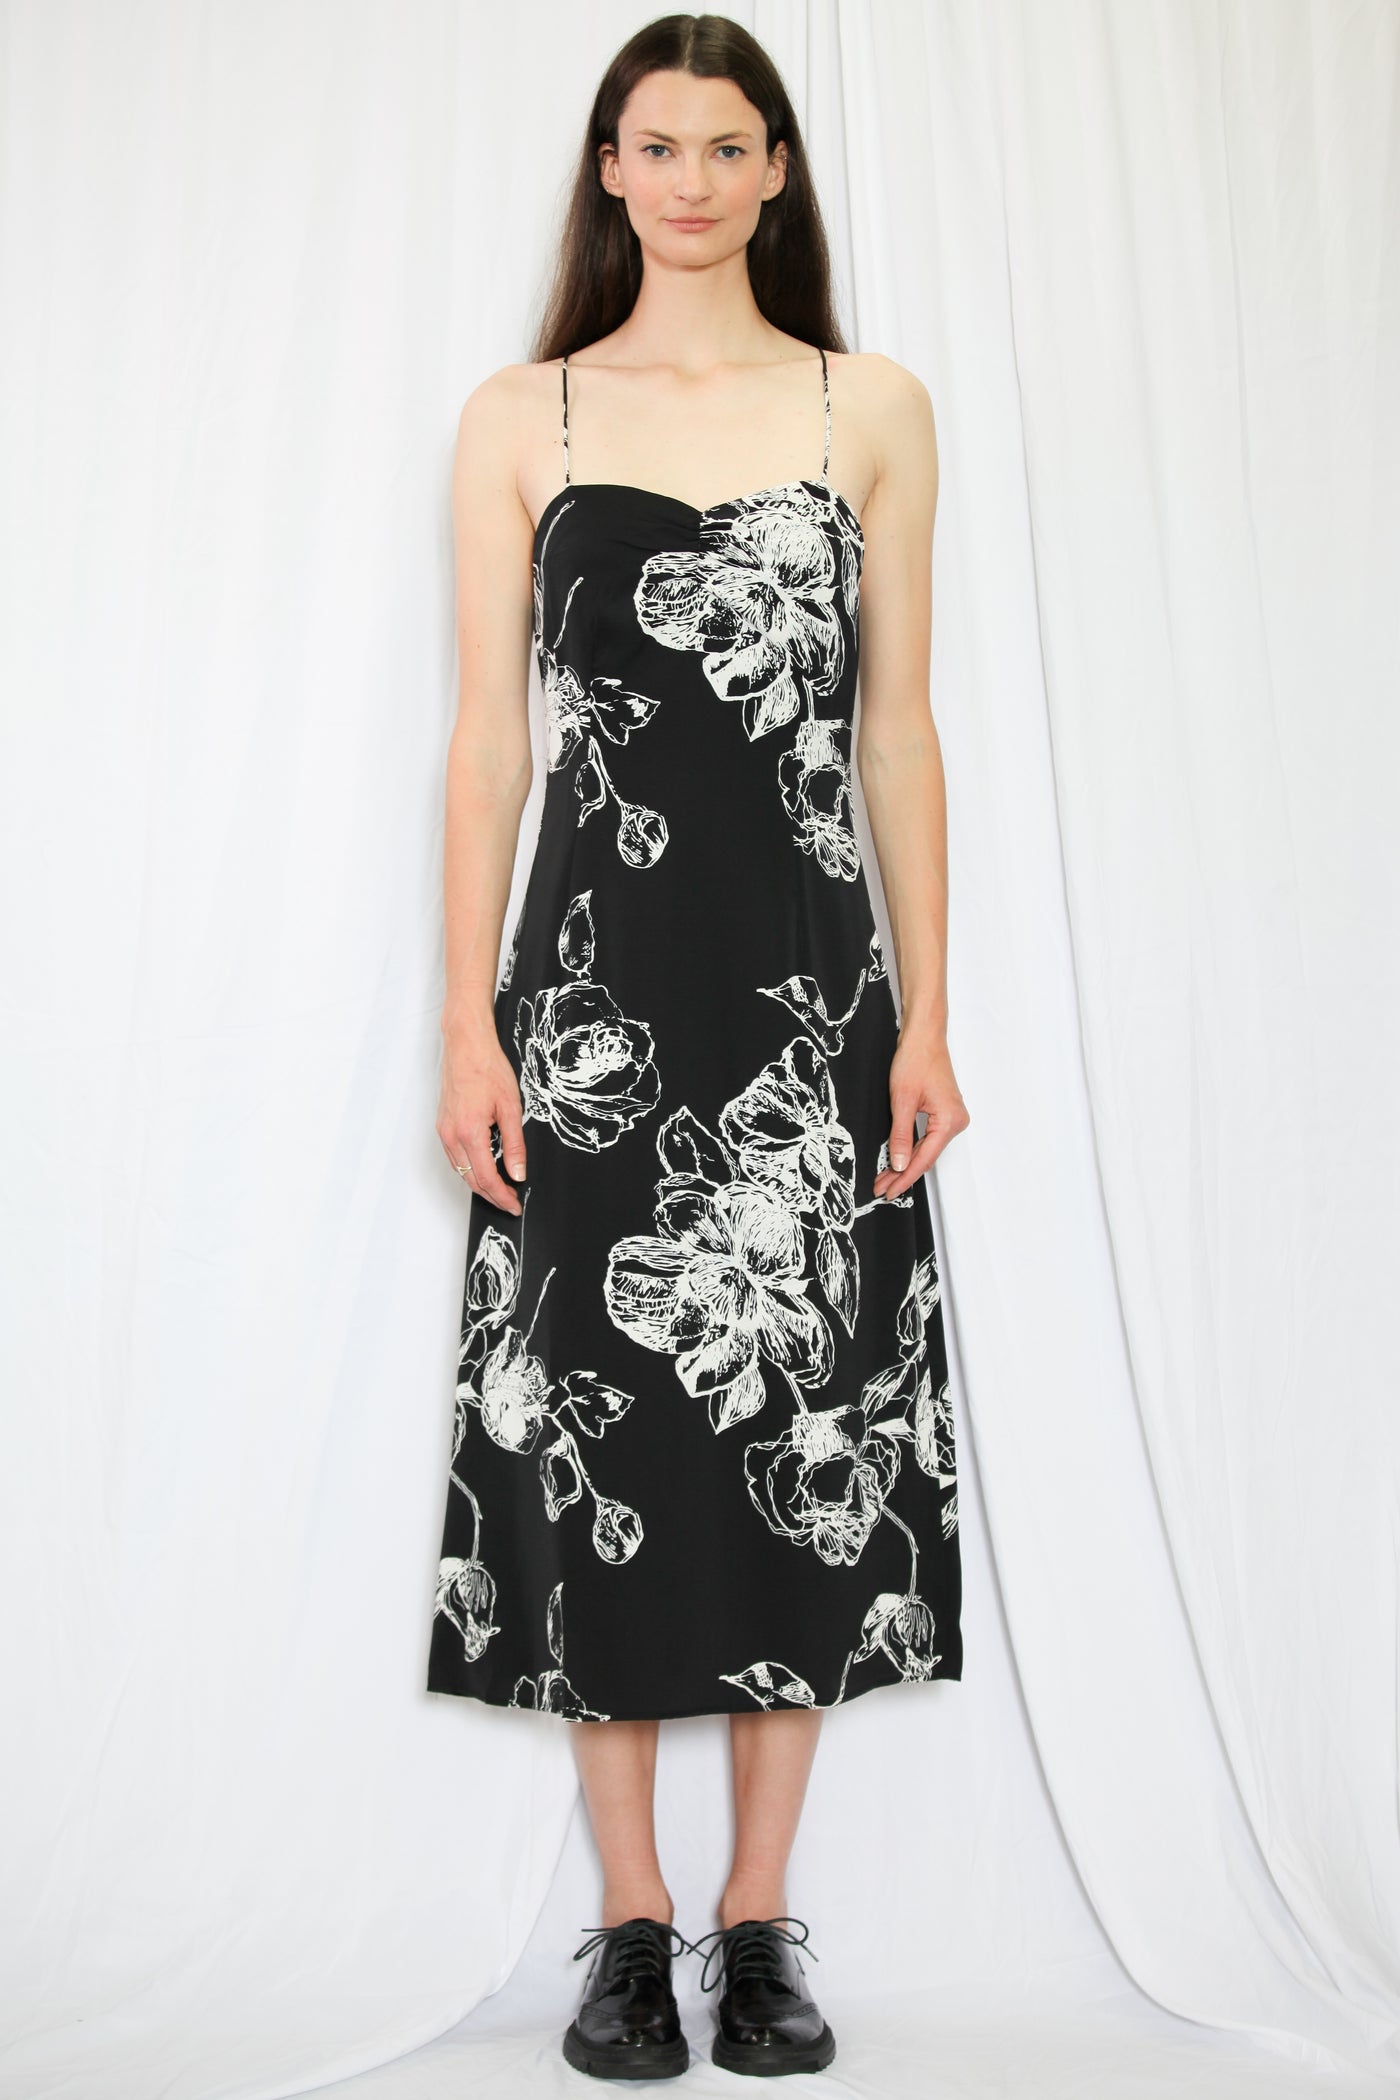 Silk Printed Black and White Floral Slip Dress